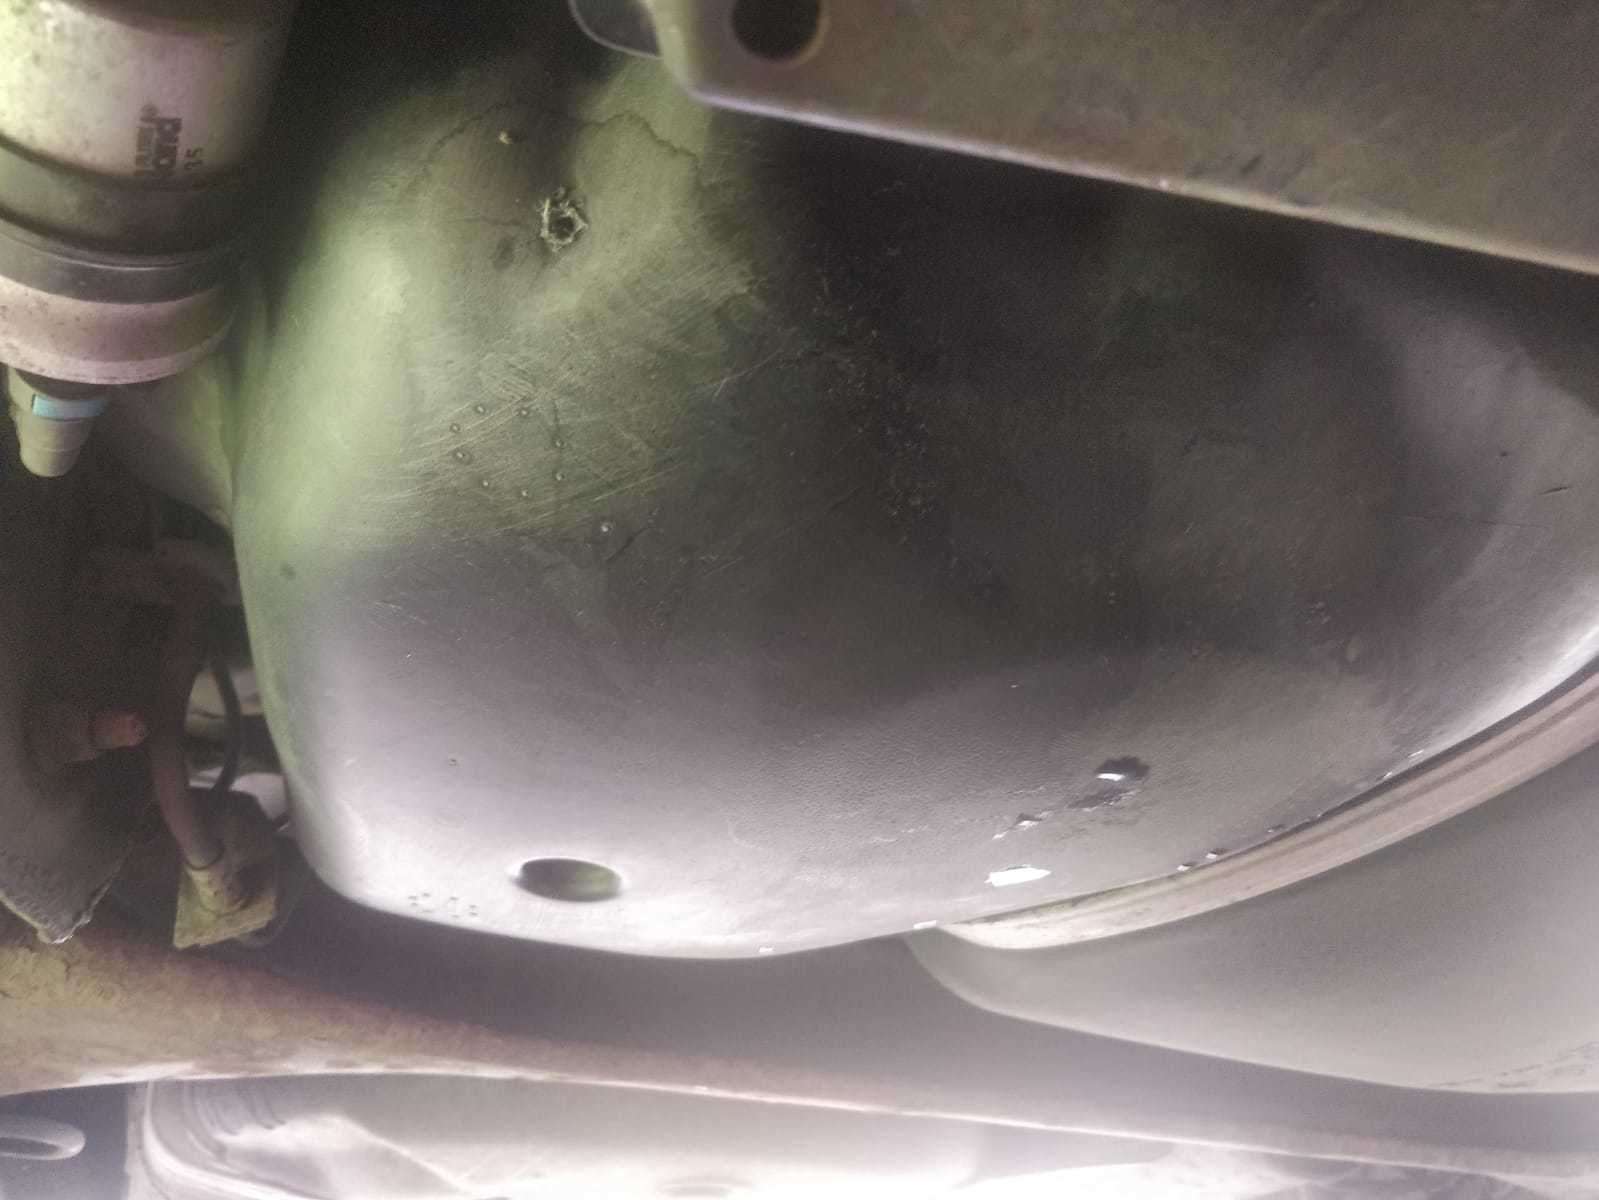 Vandals pierced a hole in Anita's fuel tank